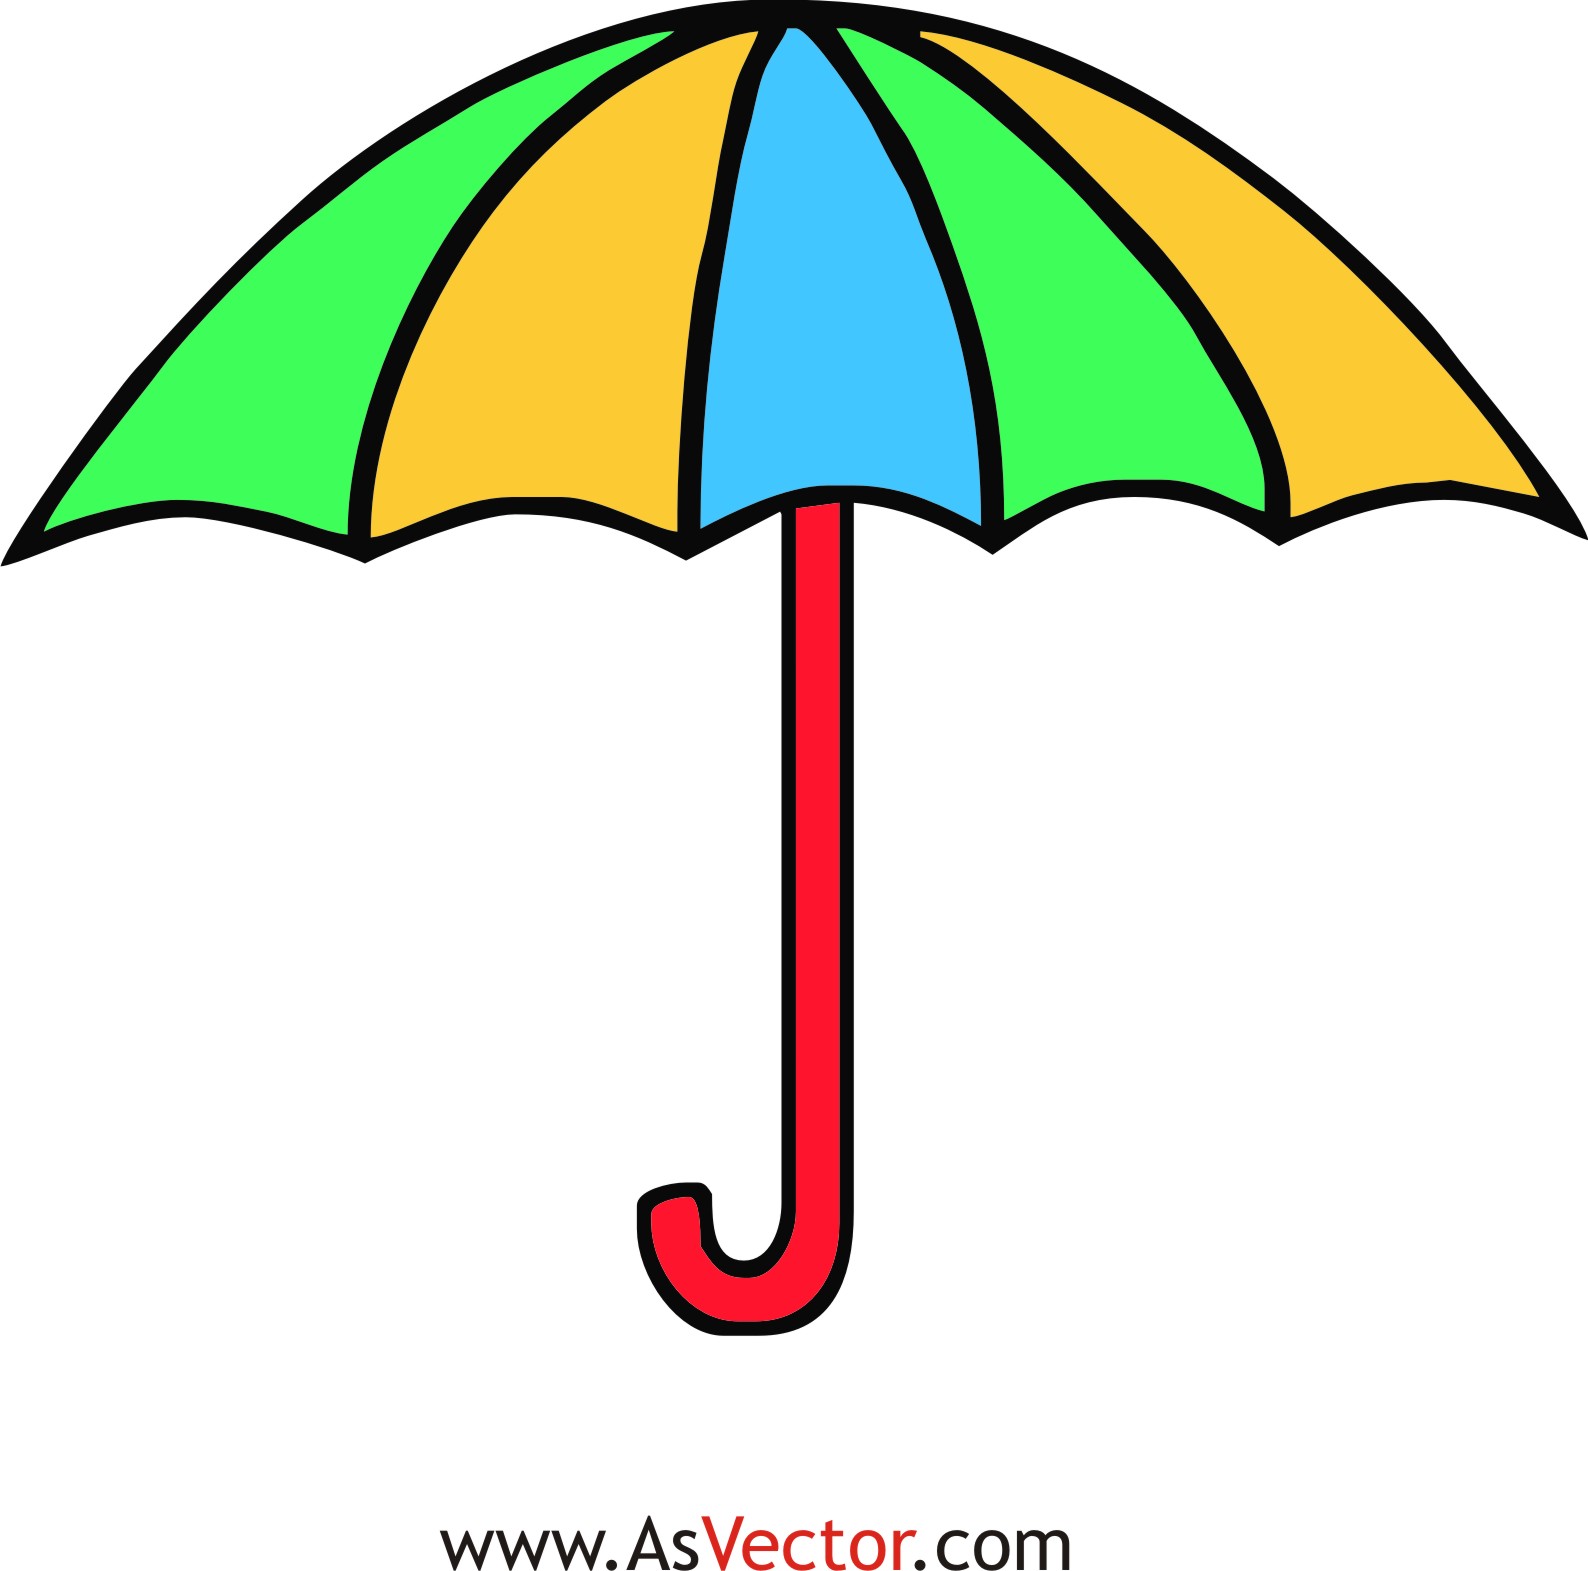 umbrella clip art images - photo #41